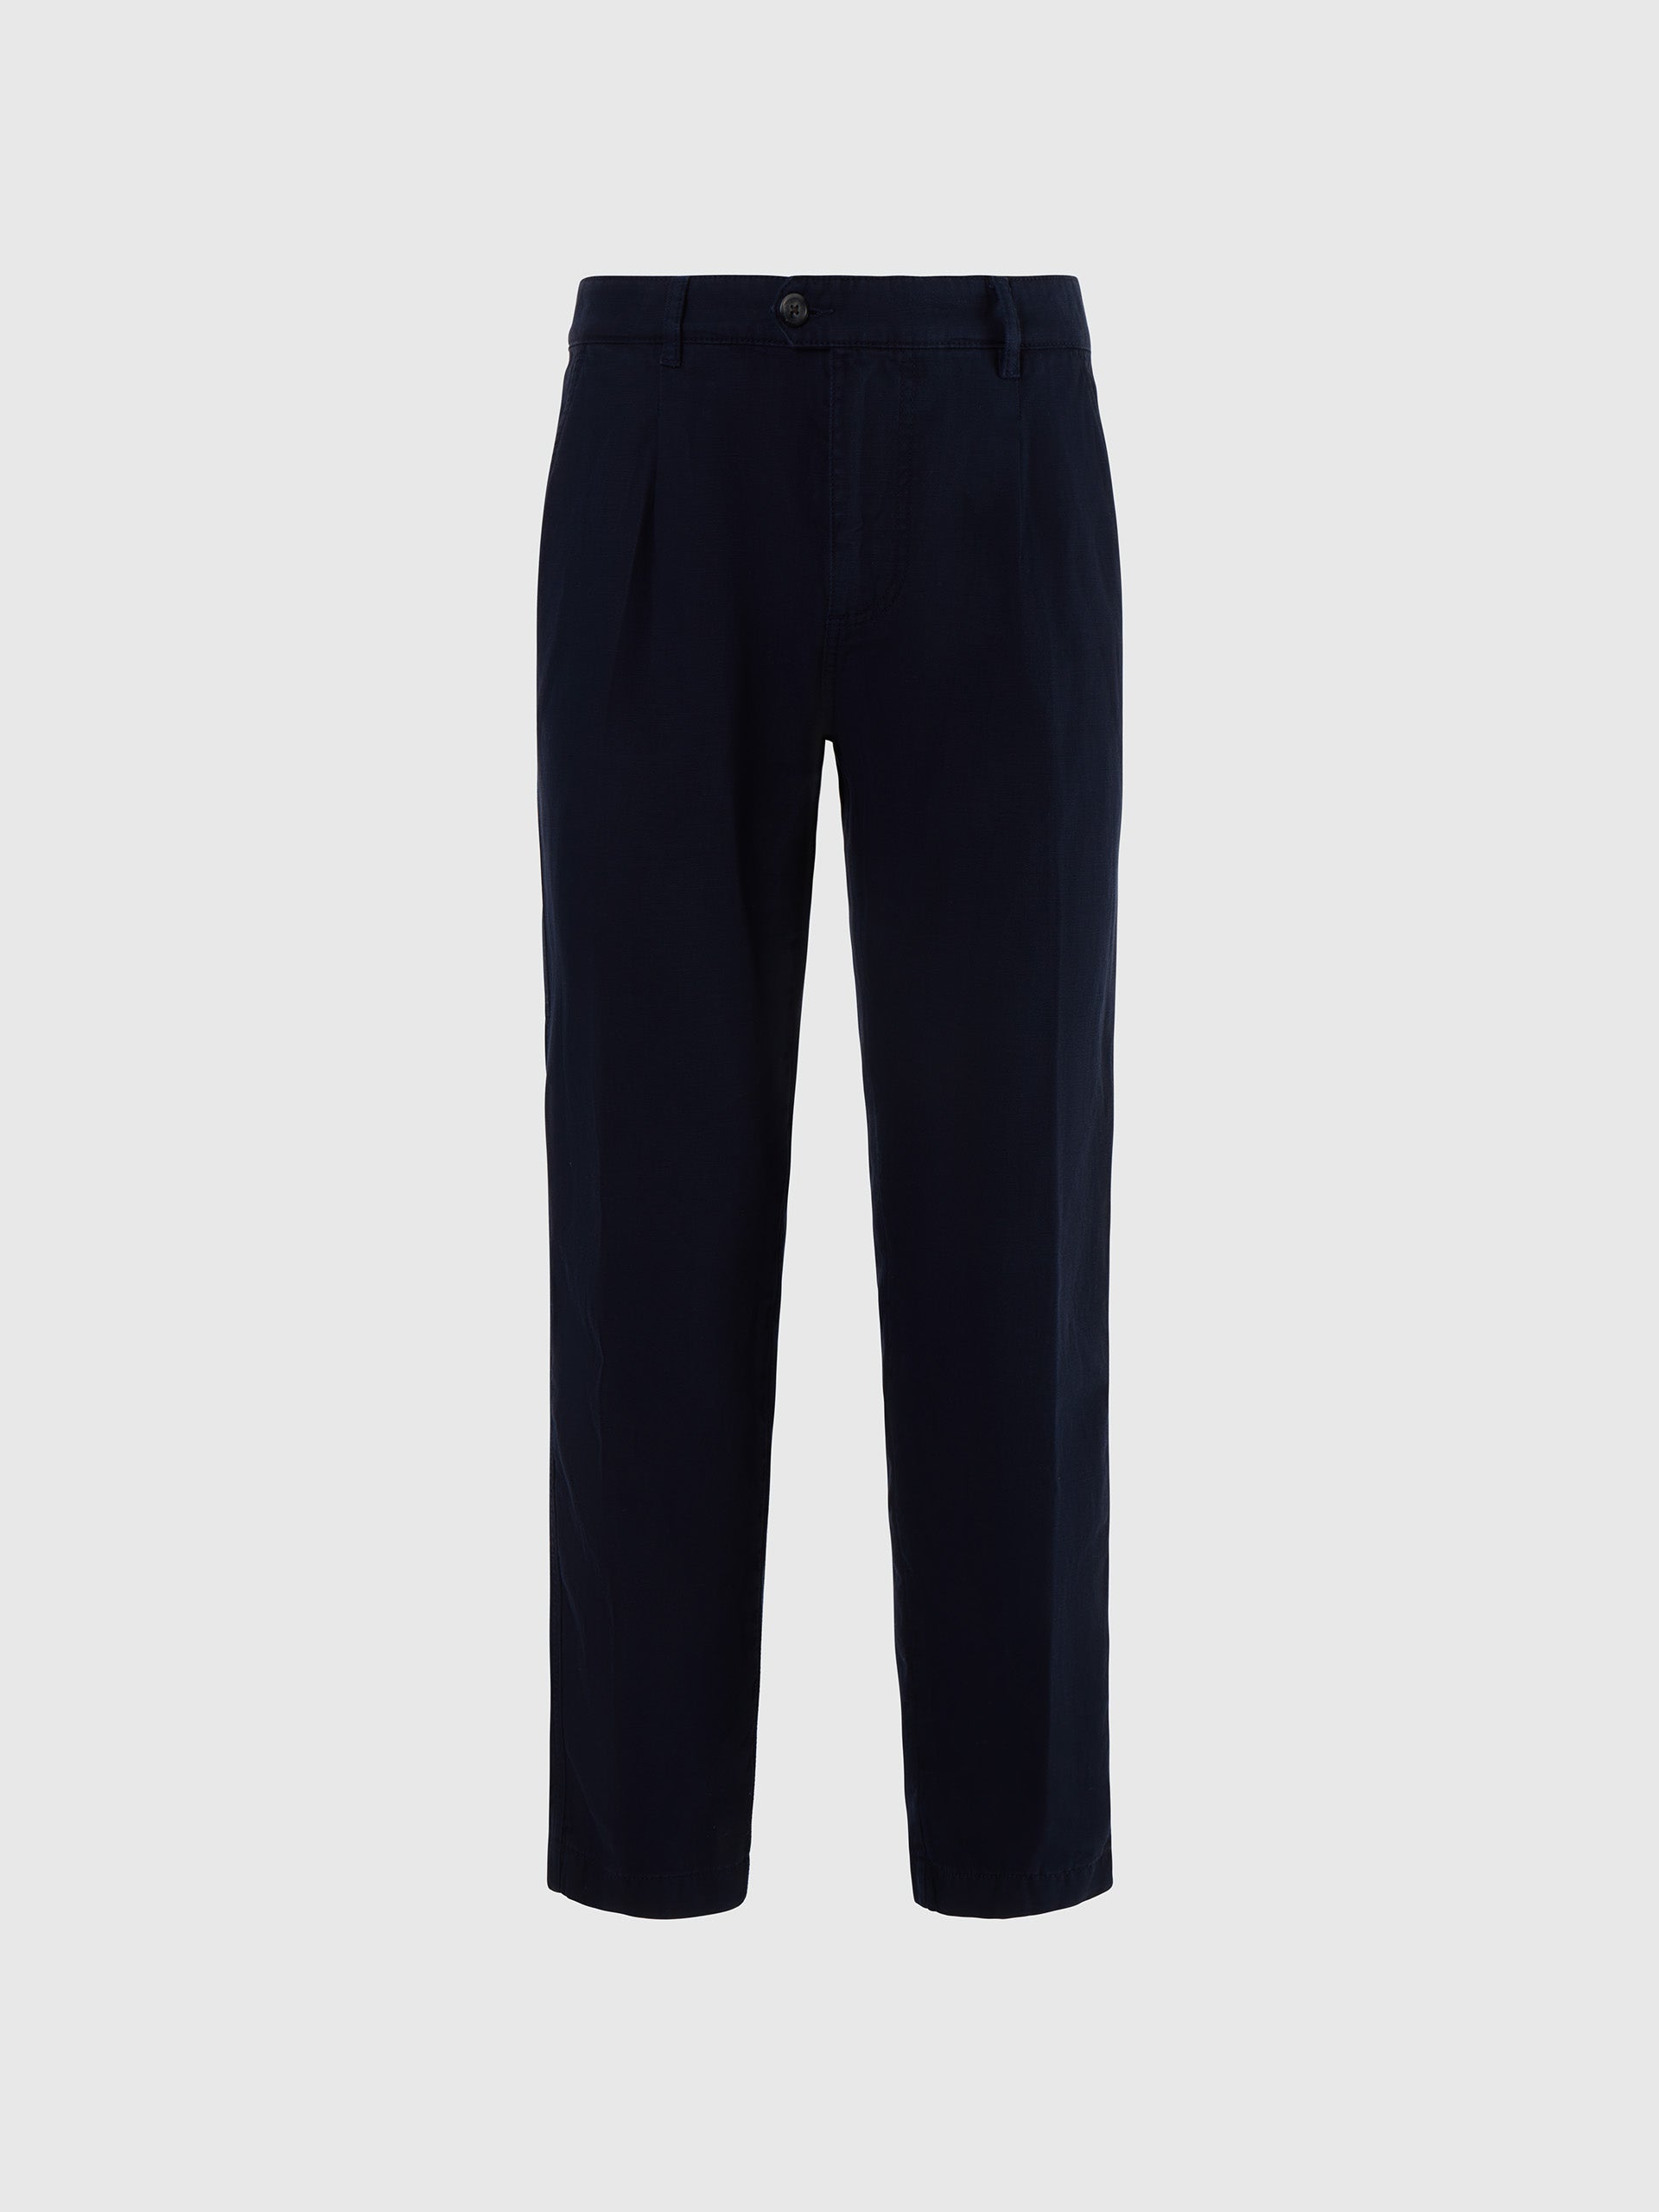 Buy Men Black Slim Fit Solid Flat Front Formal Trousers Online - 762276 |  Louis Philippe